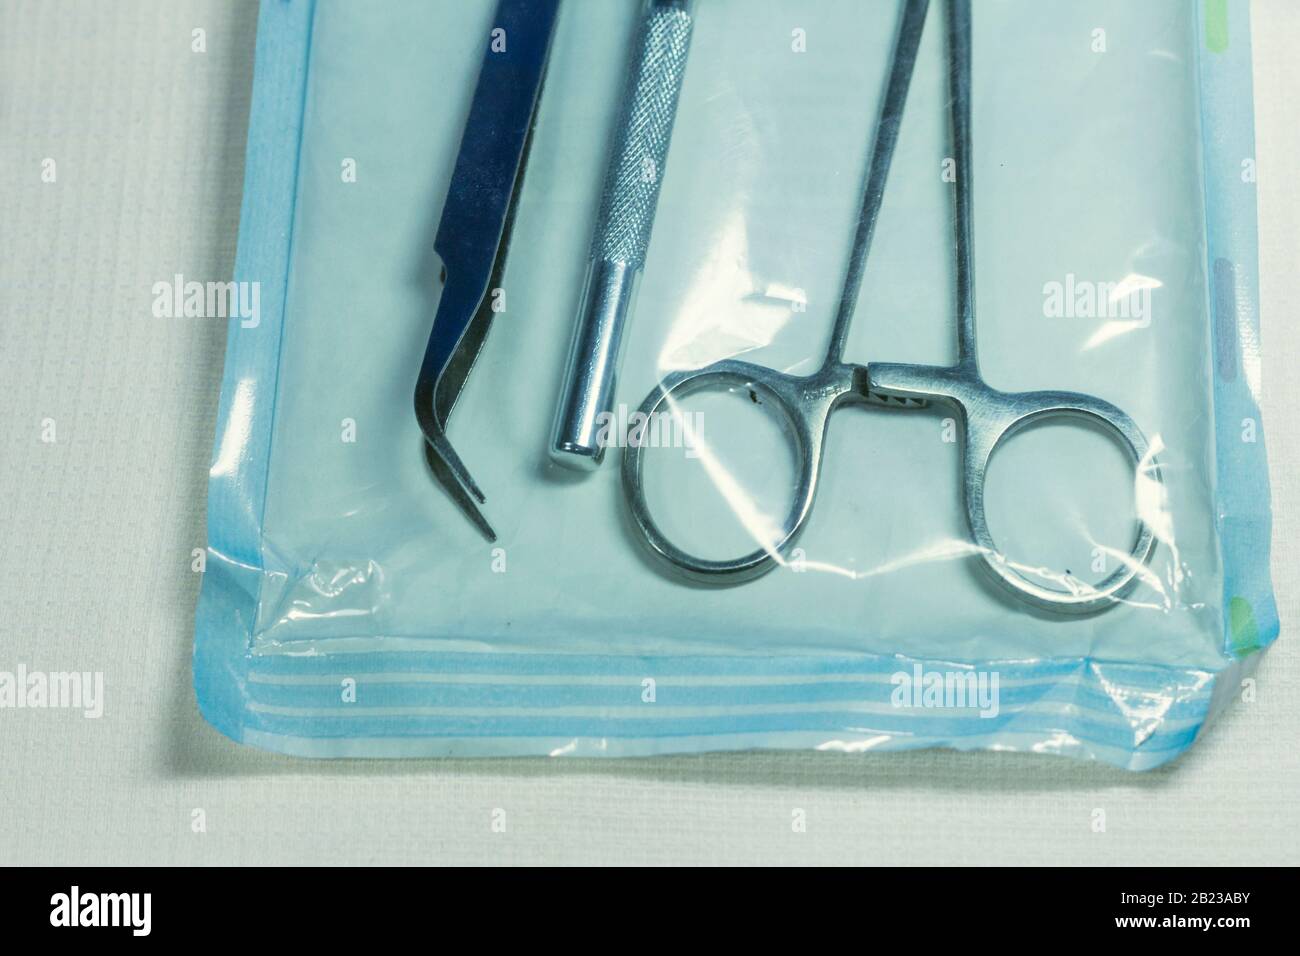 Chirurgisches Instrument in der Verpackung Stockfoto